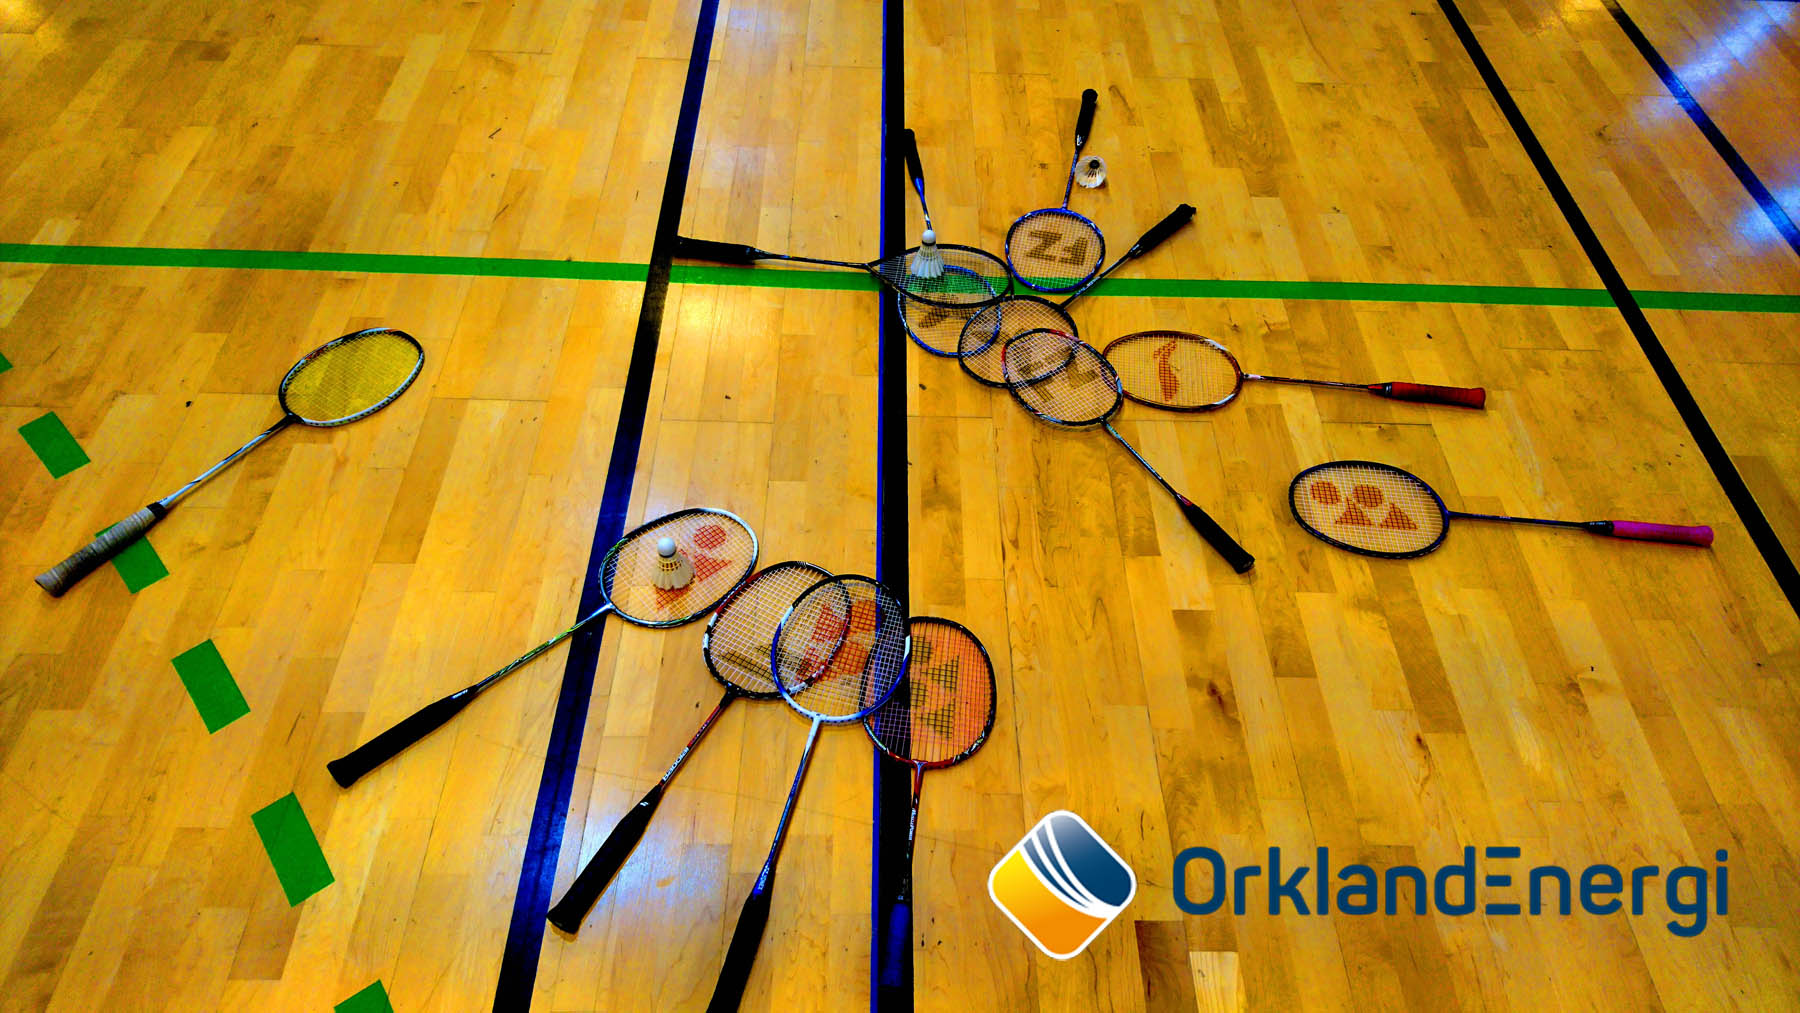 Orkland Energi + Orkanger Badmintonklubb = Sant!